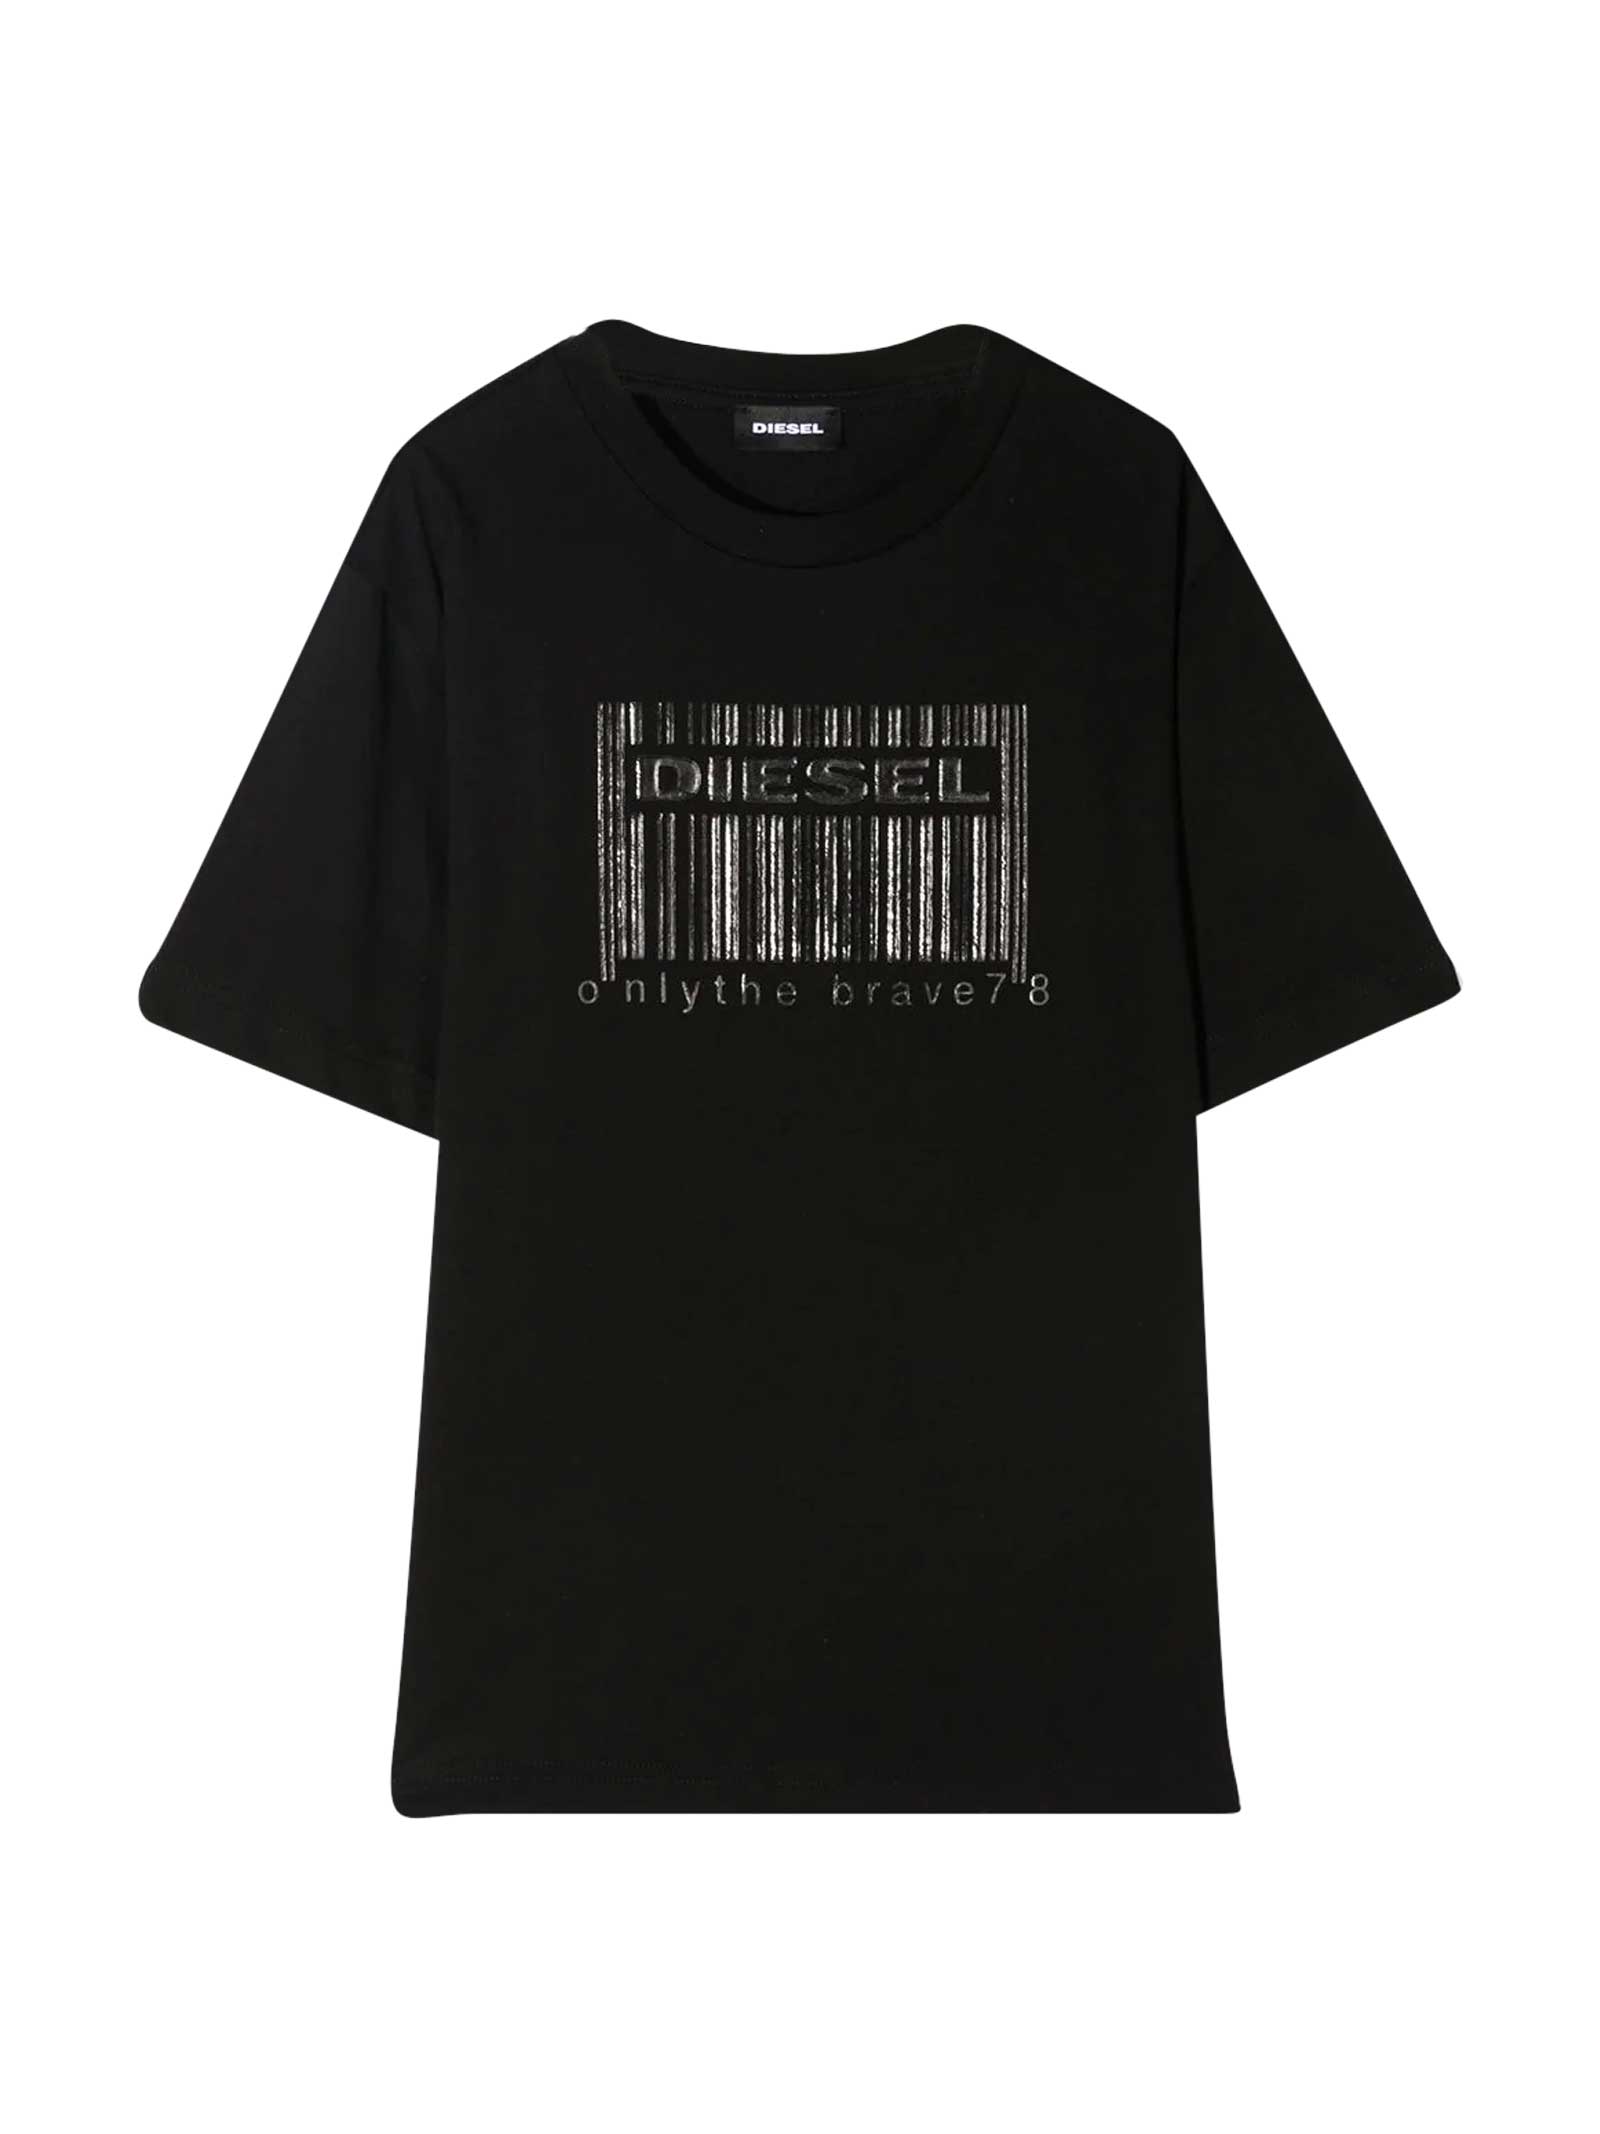 Diesel Kids' Black T-shirt